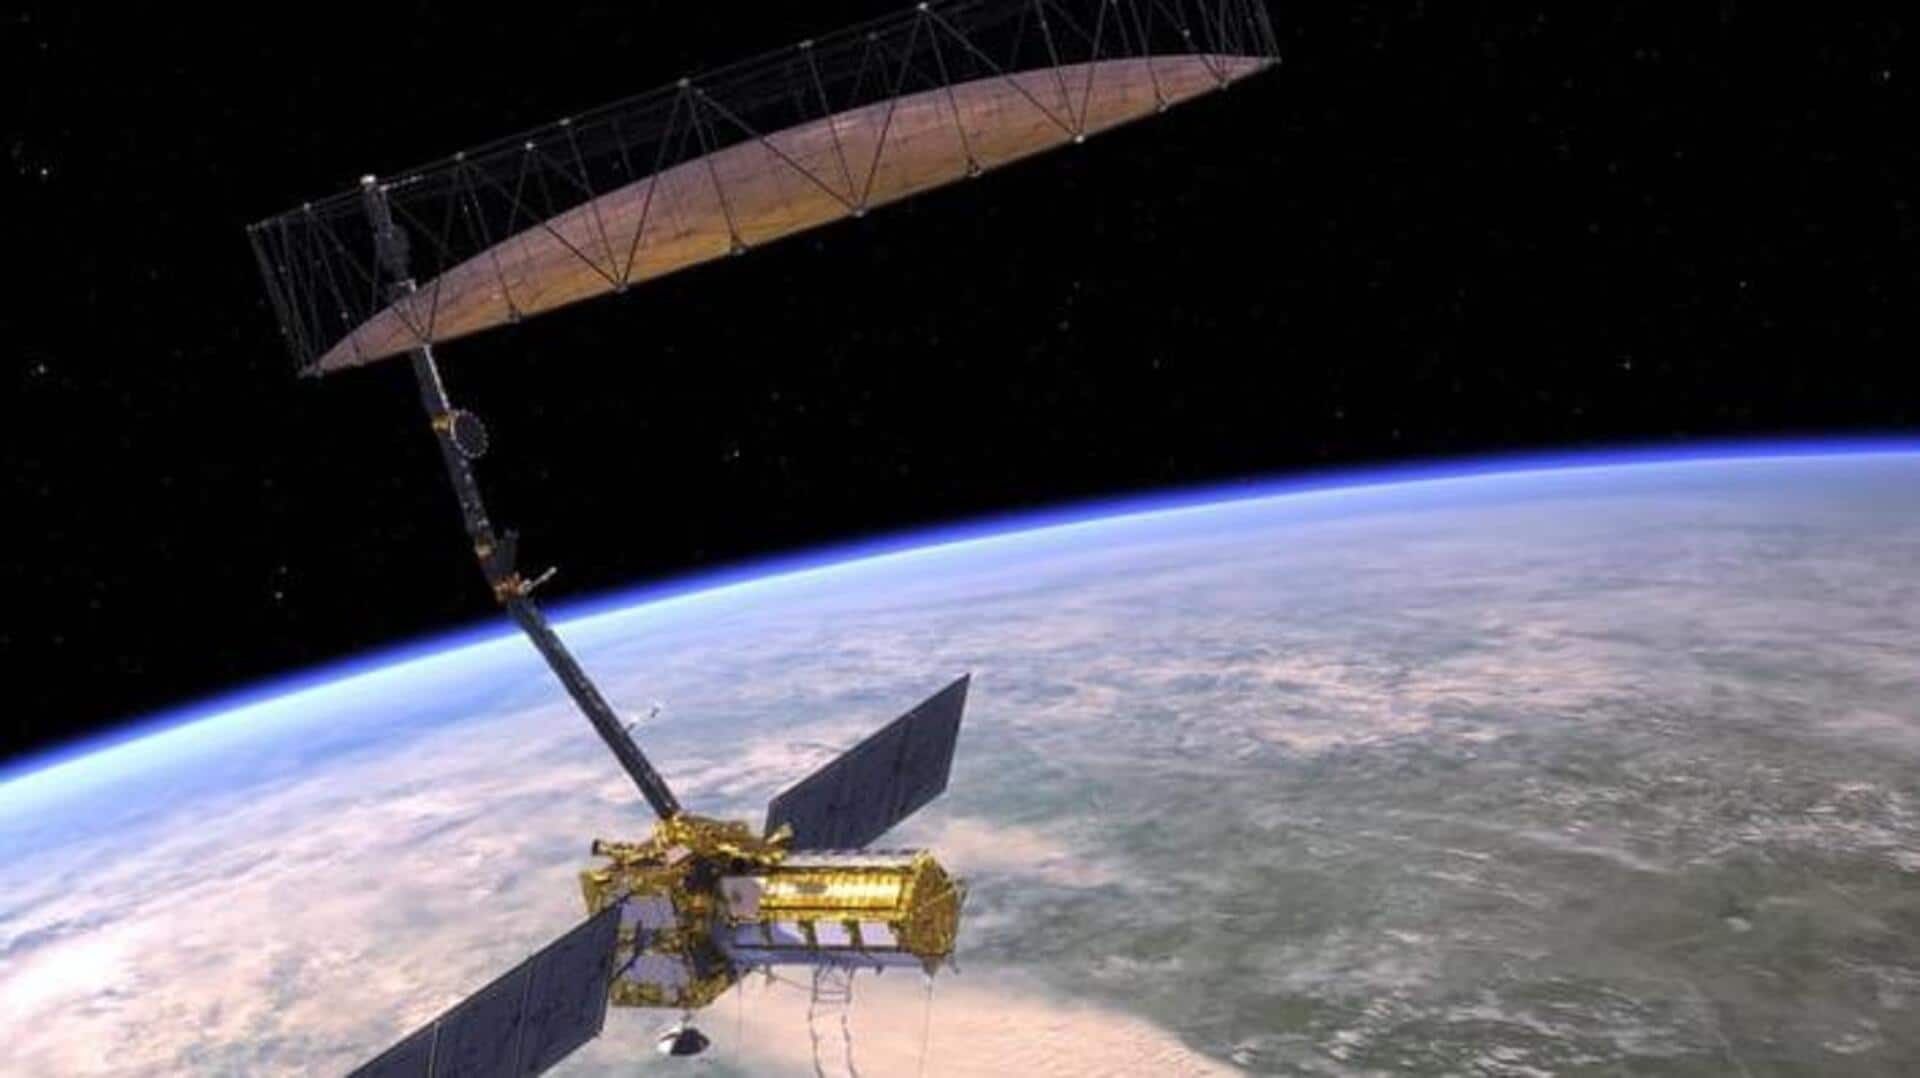 NASAISRO Earthobserving satellite achieves key milestone ahead of